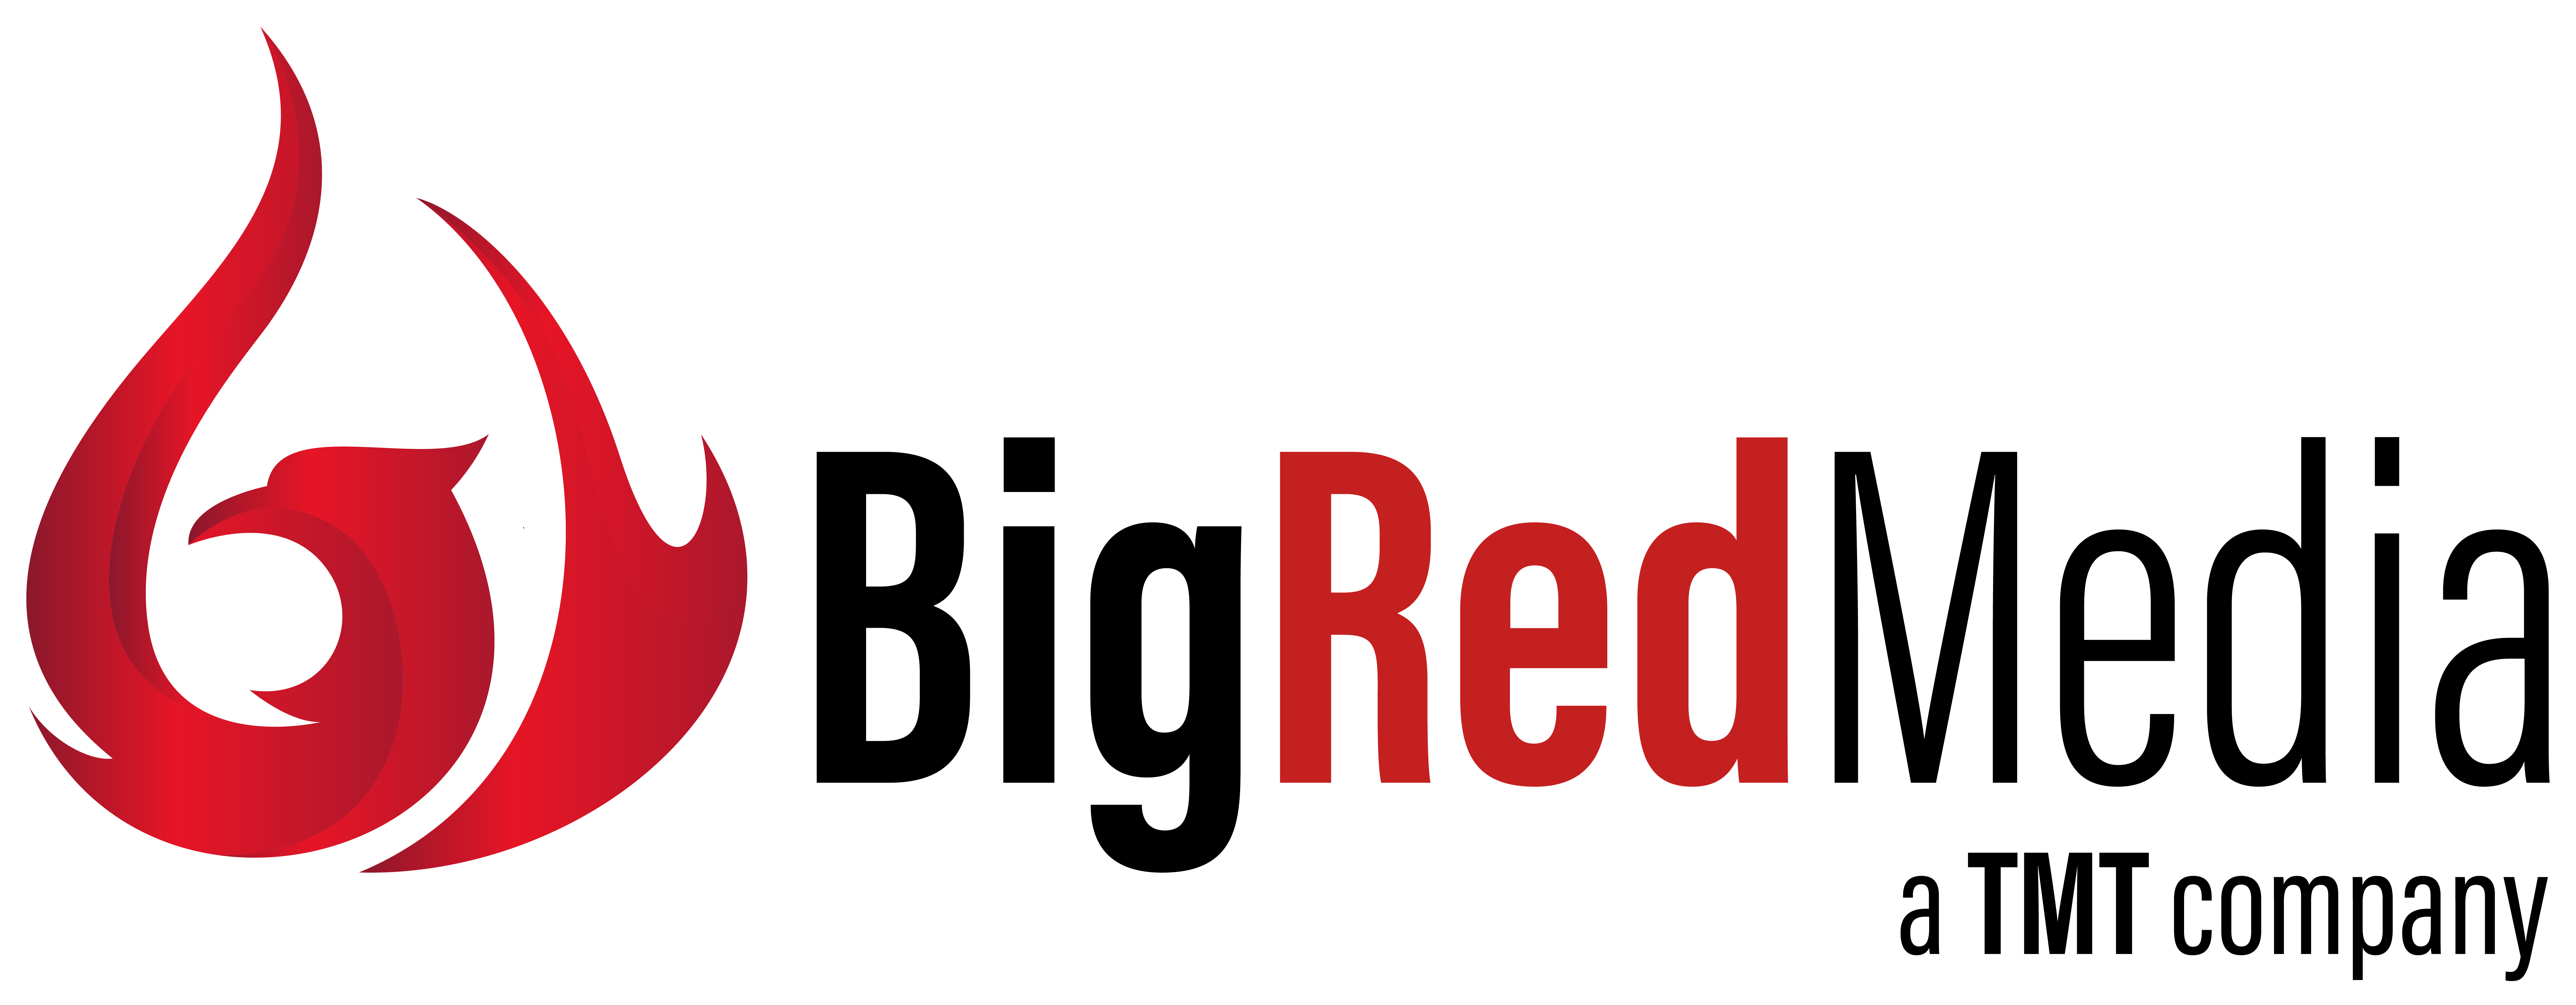 Home  Big Red Media